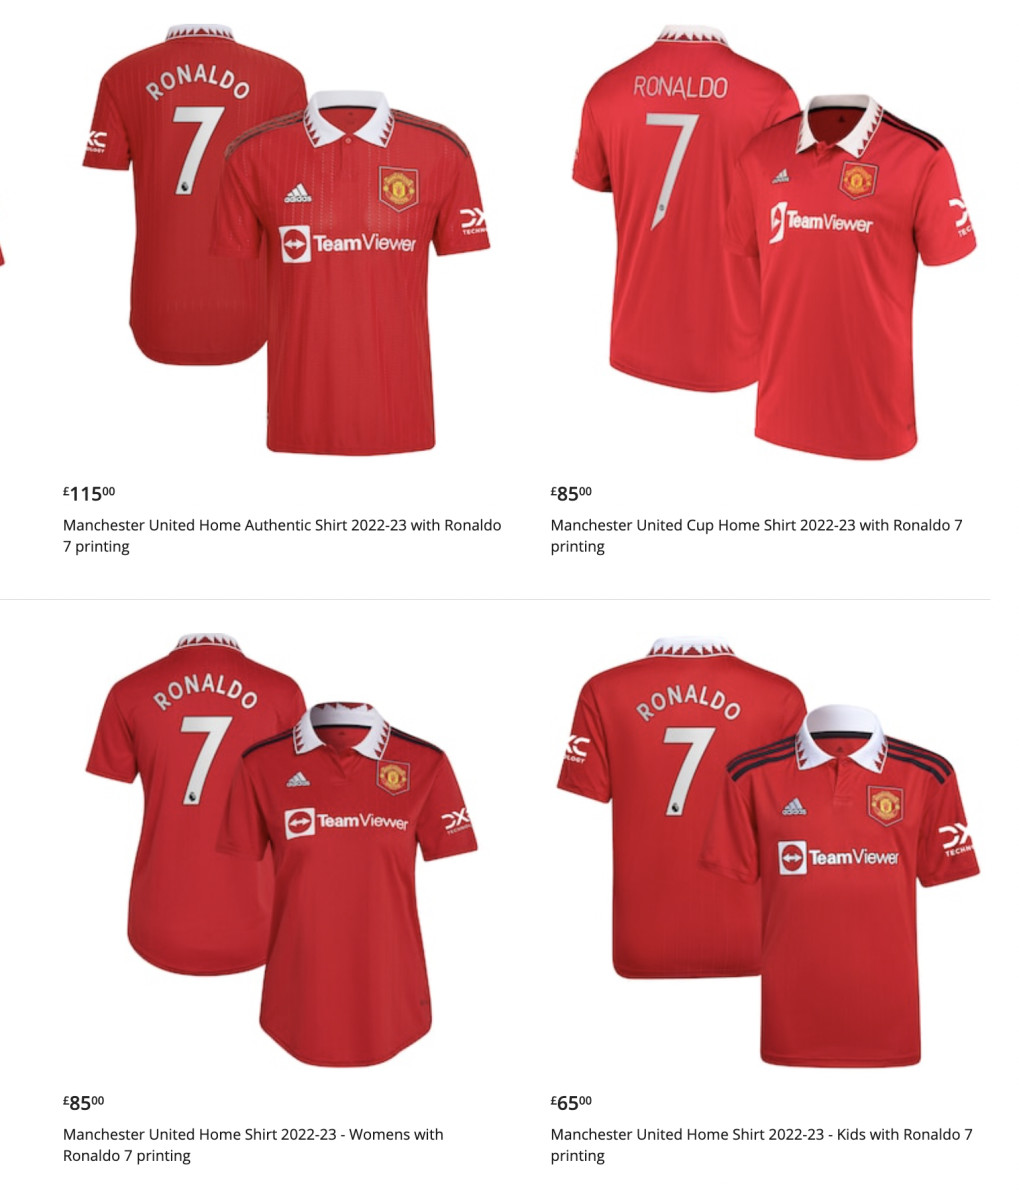 "Ronaldo 7" jerseys pictured on sale at manutd.com in July 2022